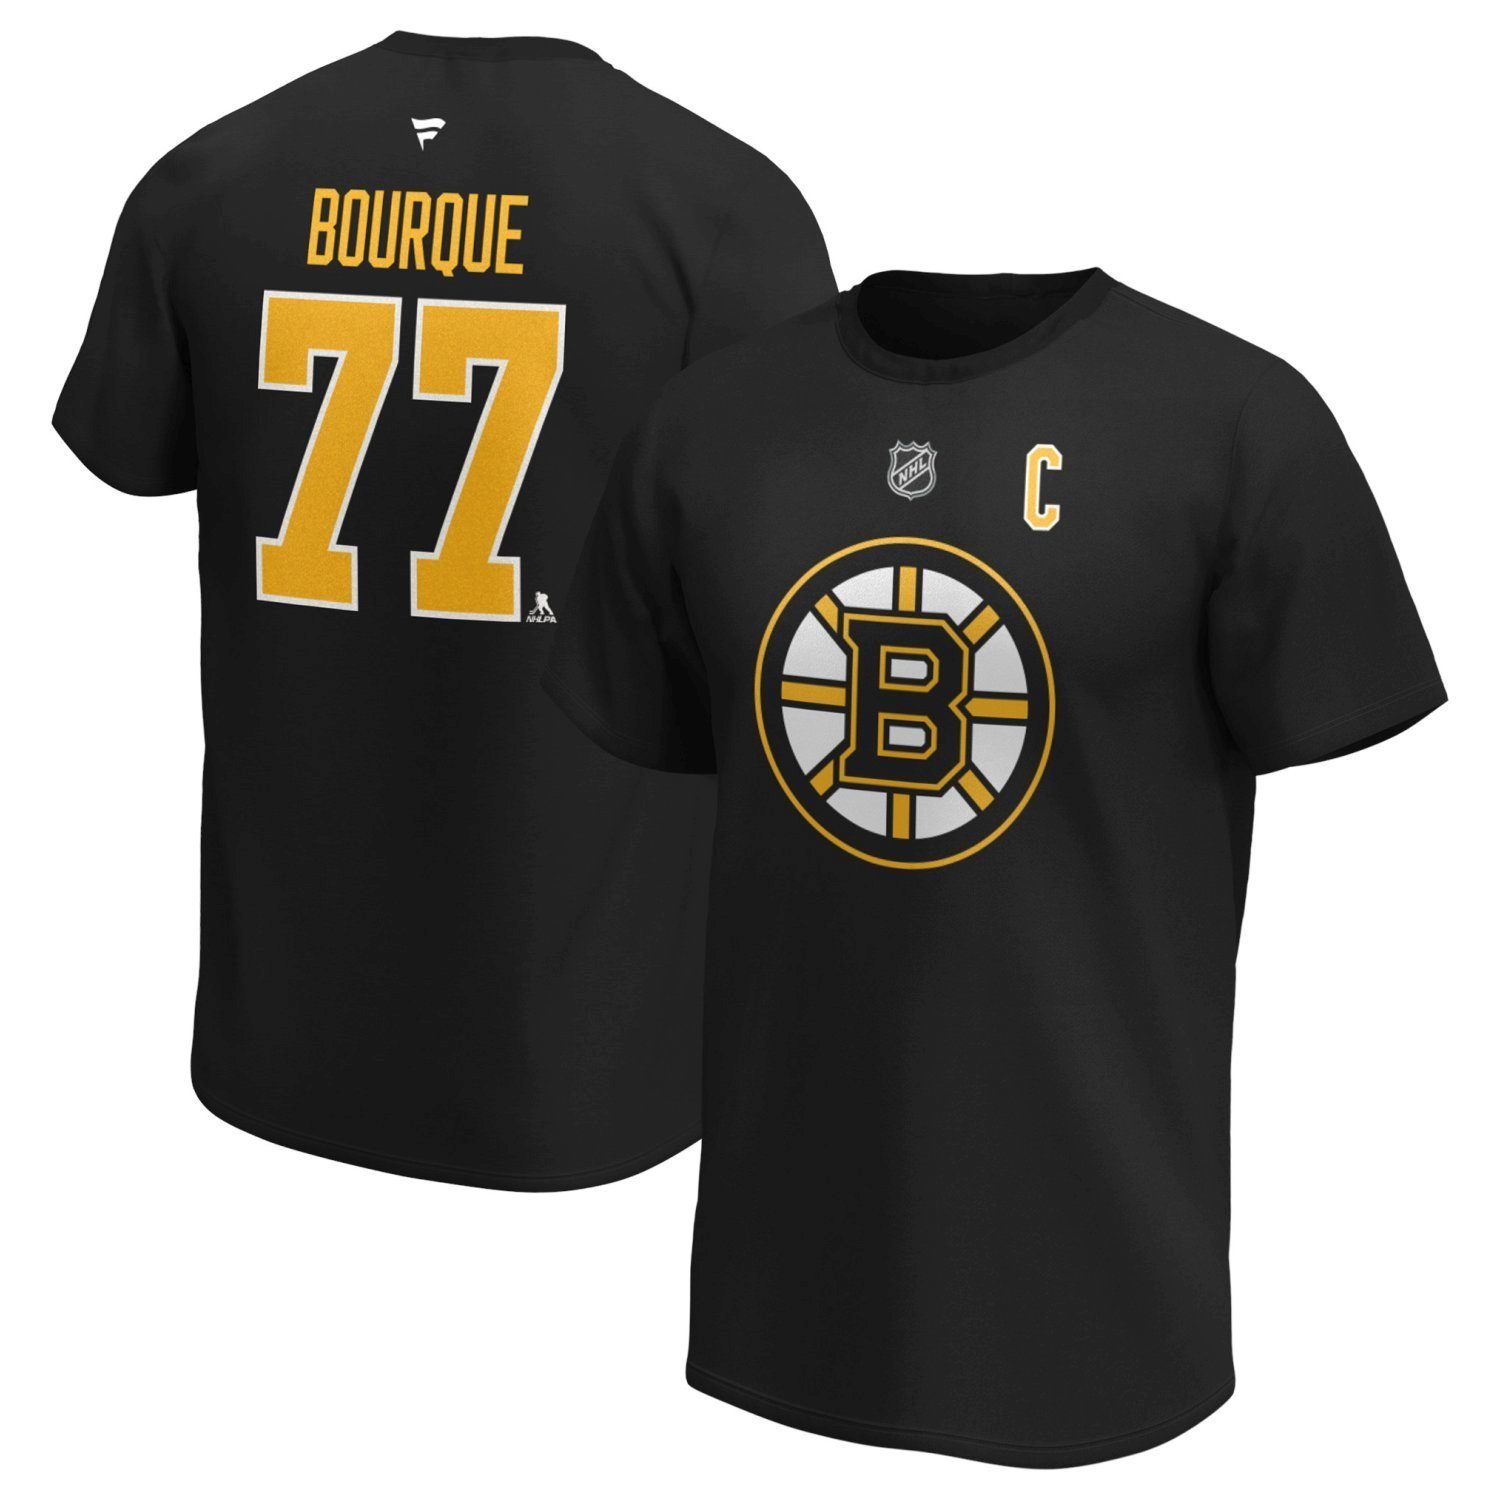 Herren Shirts Fanatics Print-Shirt Boston Bruins NHL #77 Ray Bourque